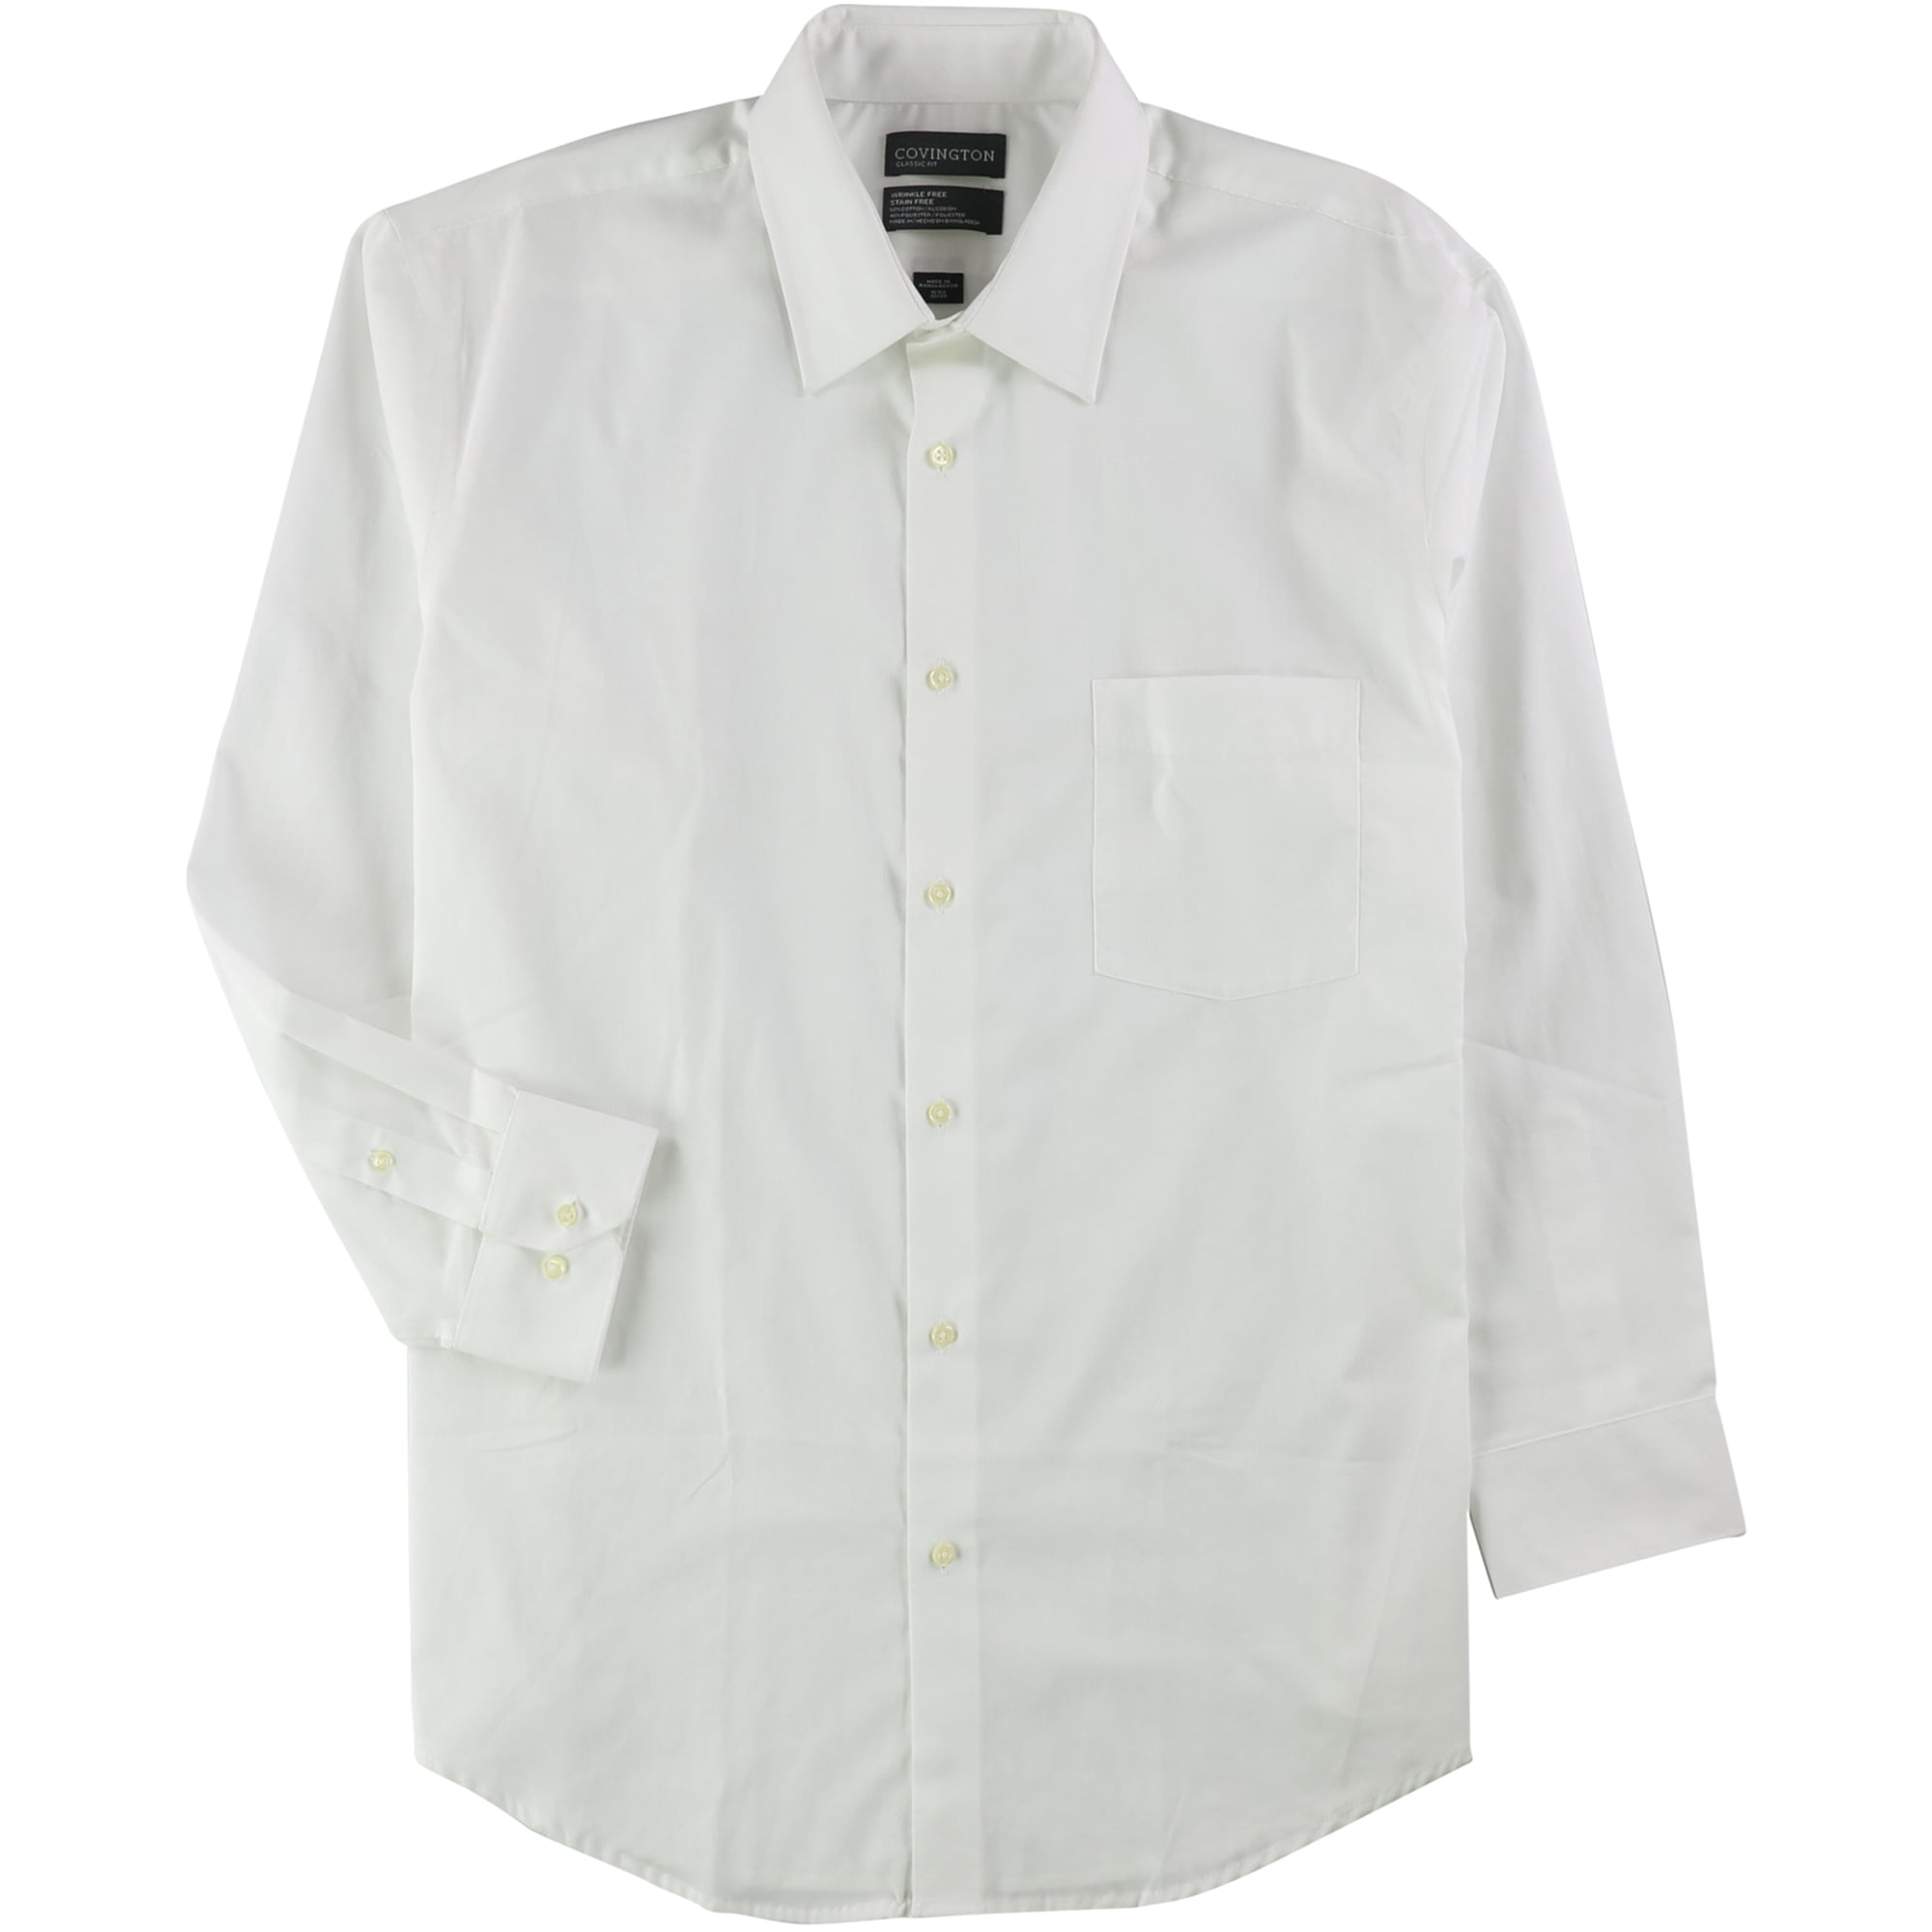 Covington Mens Classic Fit Ultimate Performance Short Sleeve Dress Shirt Size Medium 15-15.5